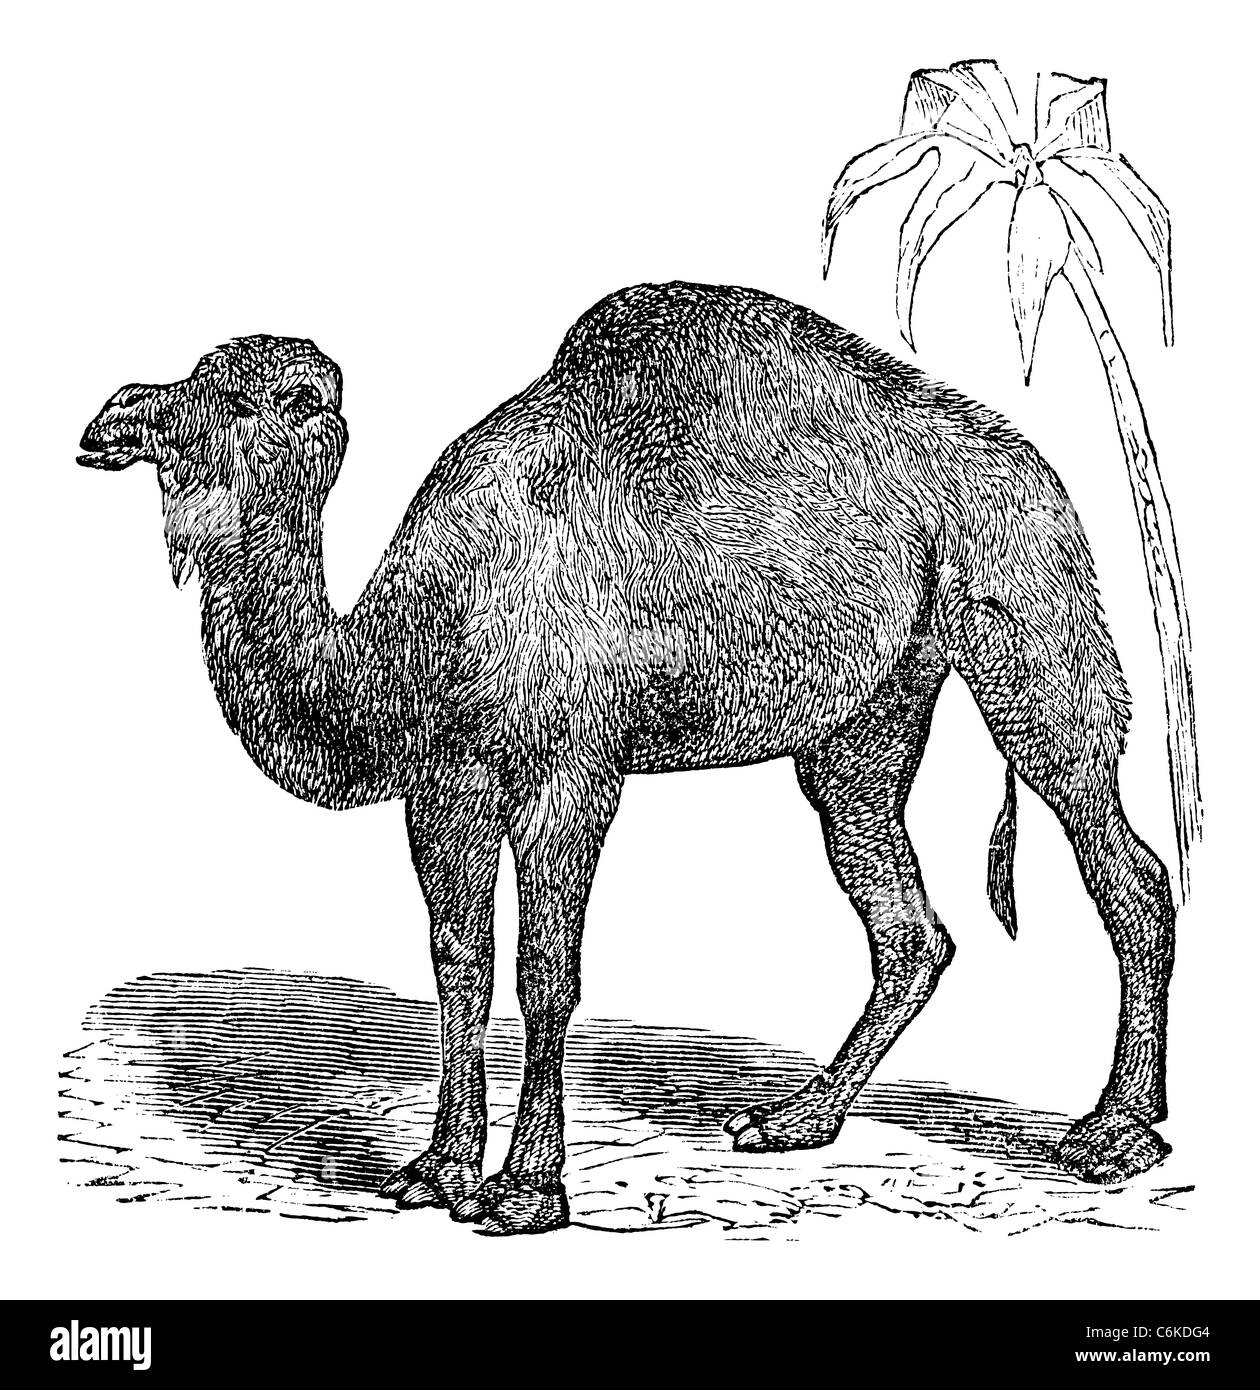 Camello arábigo o dromedario, Camelus dromedarius vintage grabado. Antigua ilustración grabada de dromedario cerca de palm tree Foto de stock